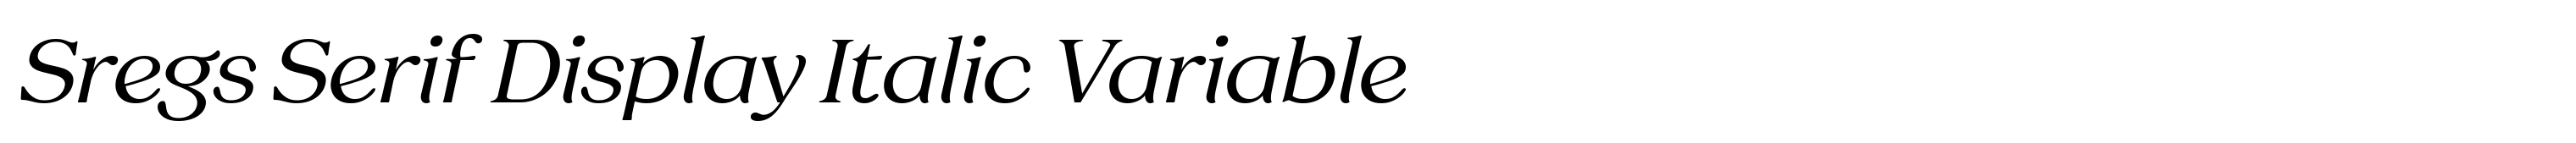 Sregs Serif Display Italic Variable